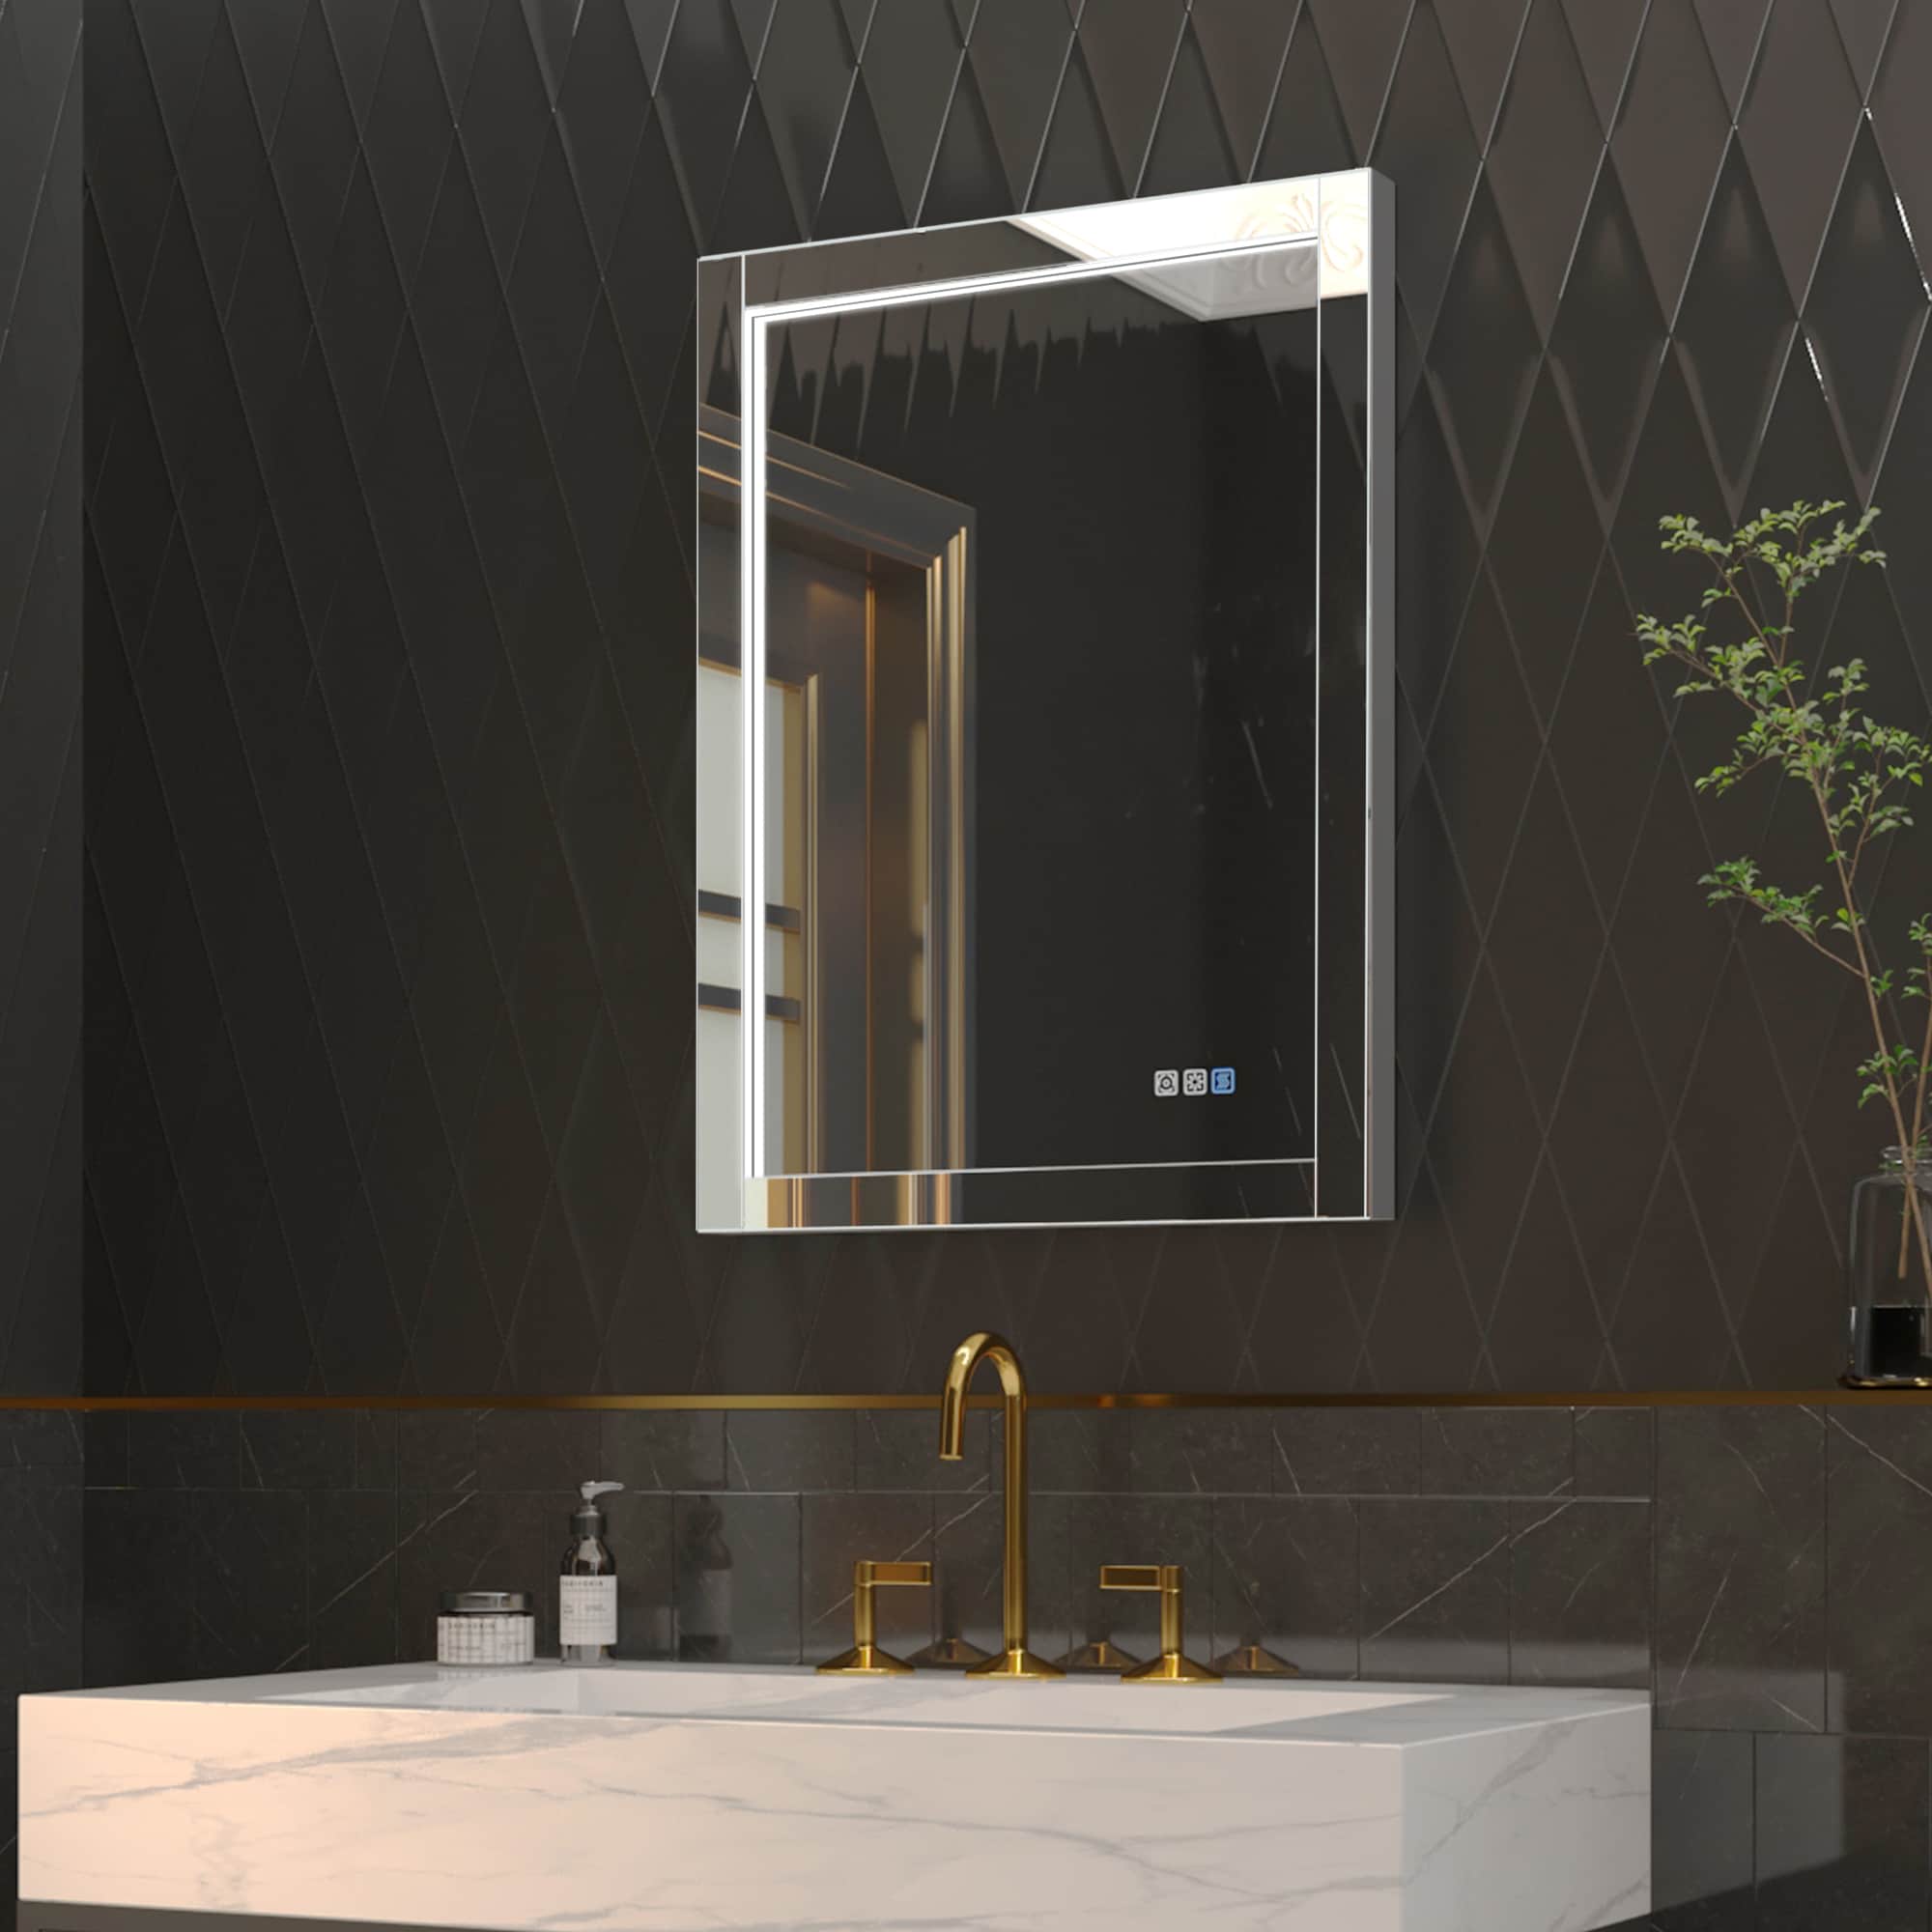 ExBrite 24-in x 32-in Dimmable Lighted LED Mirror- 24W Fog Free Framed Bathroom Vanity Mirror | DHBM4024BLAL